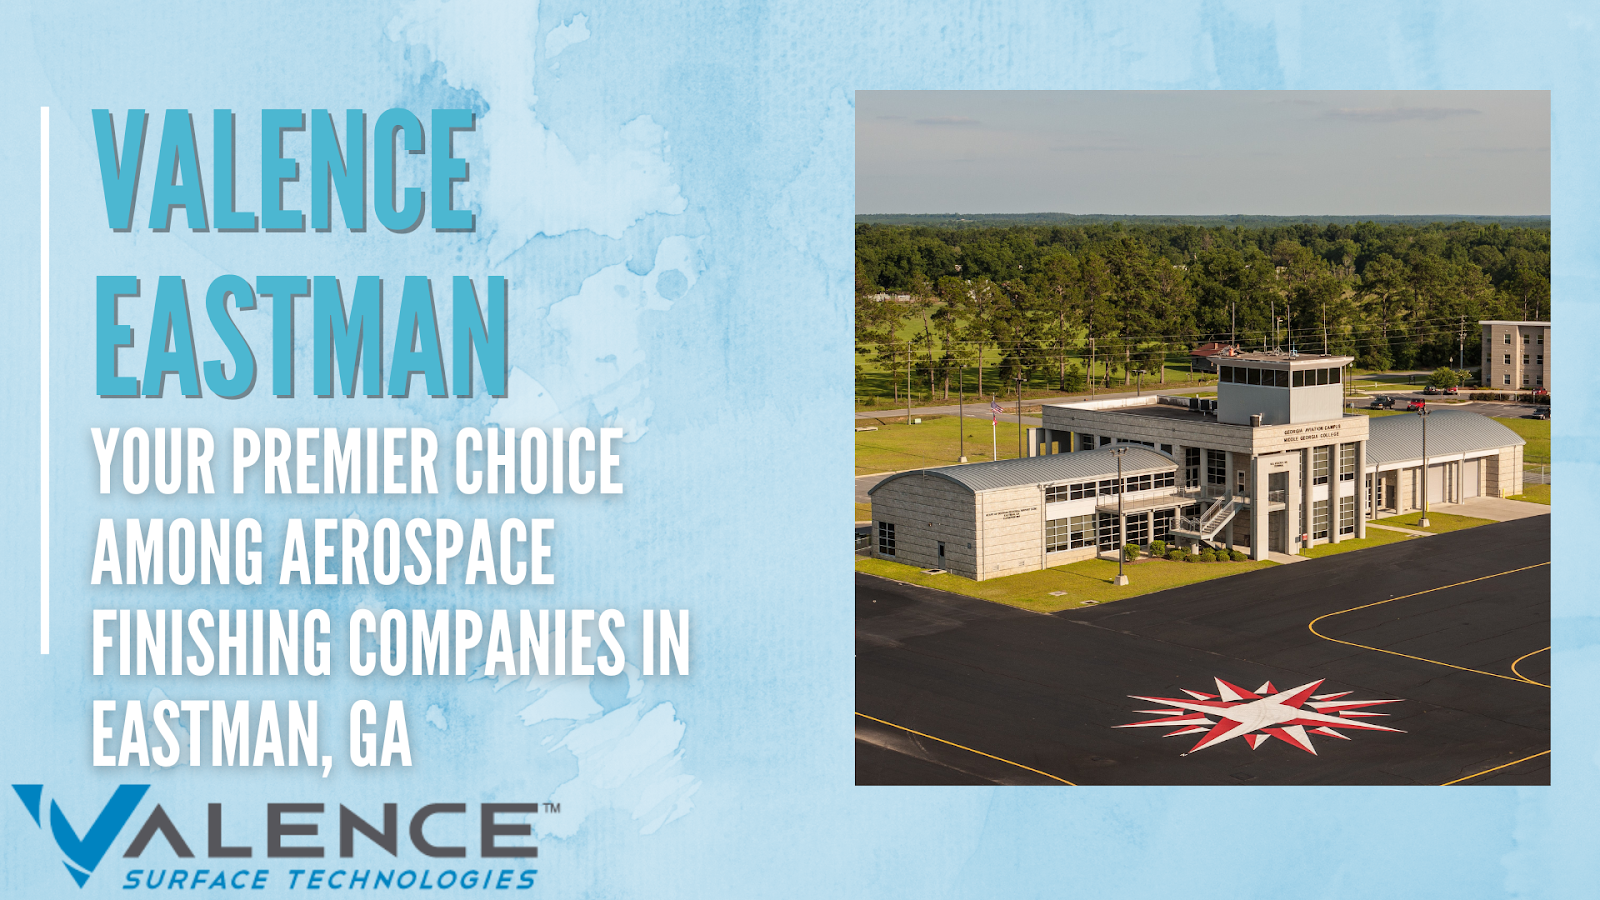 Valence Eastman: Your Premier Choice Among Aerospace Finishing Companies In Eastman, GA<br />
